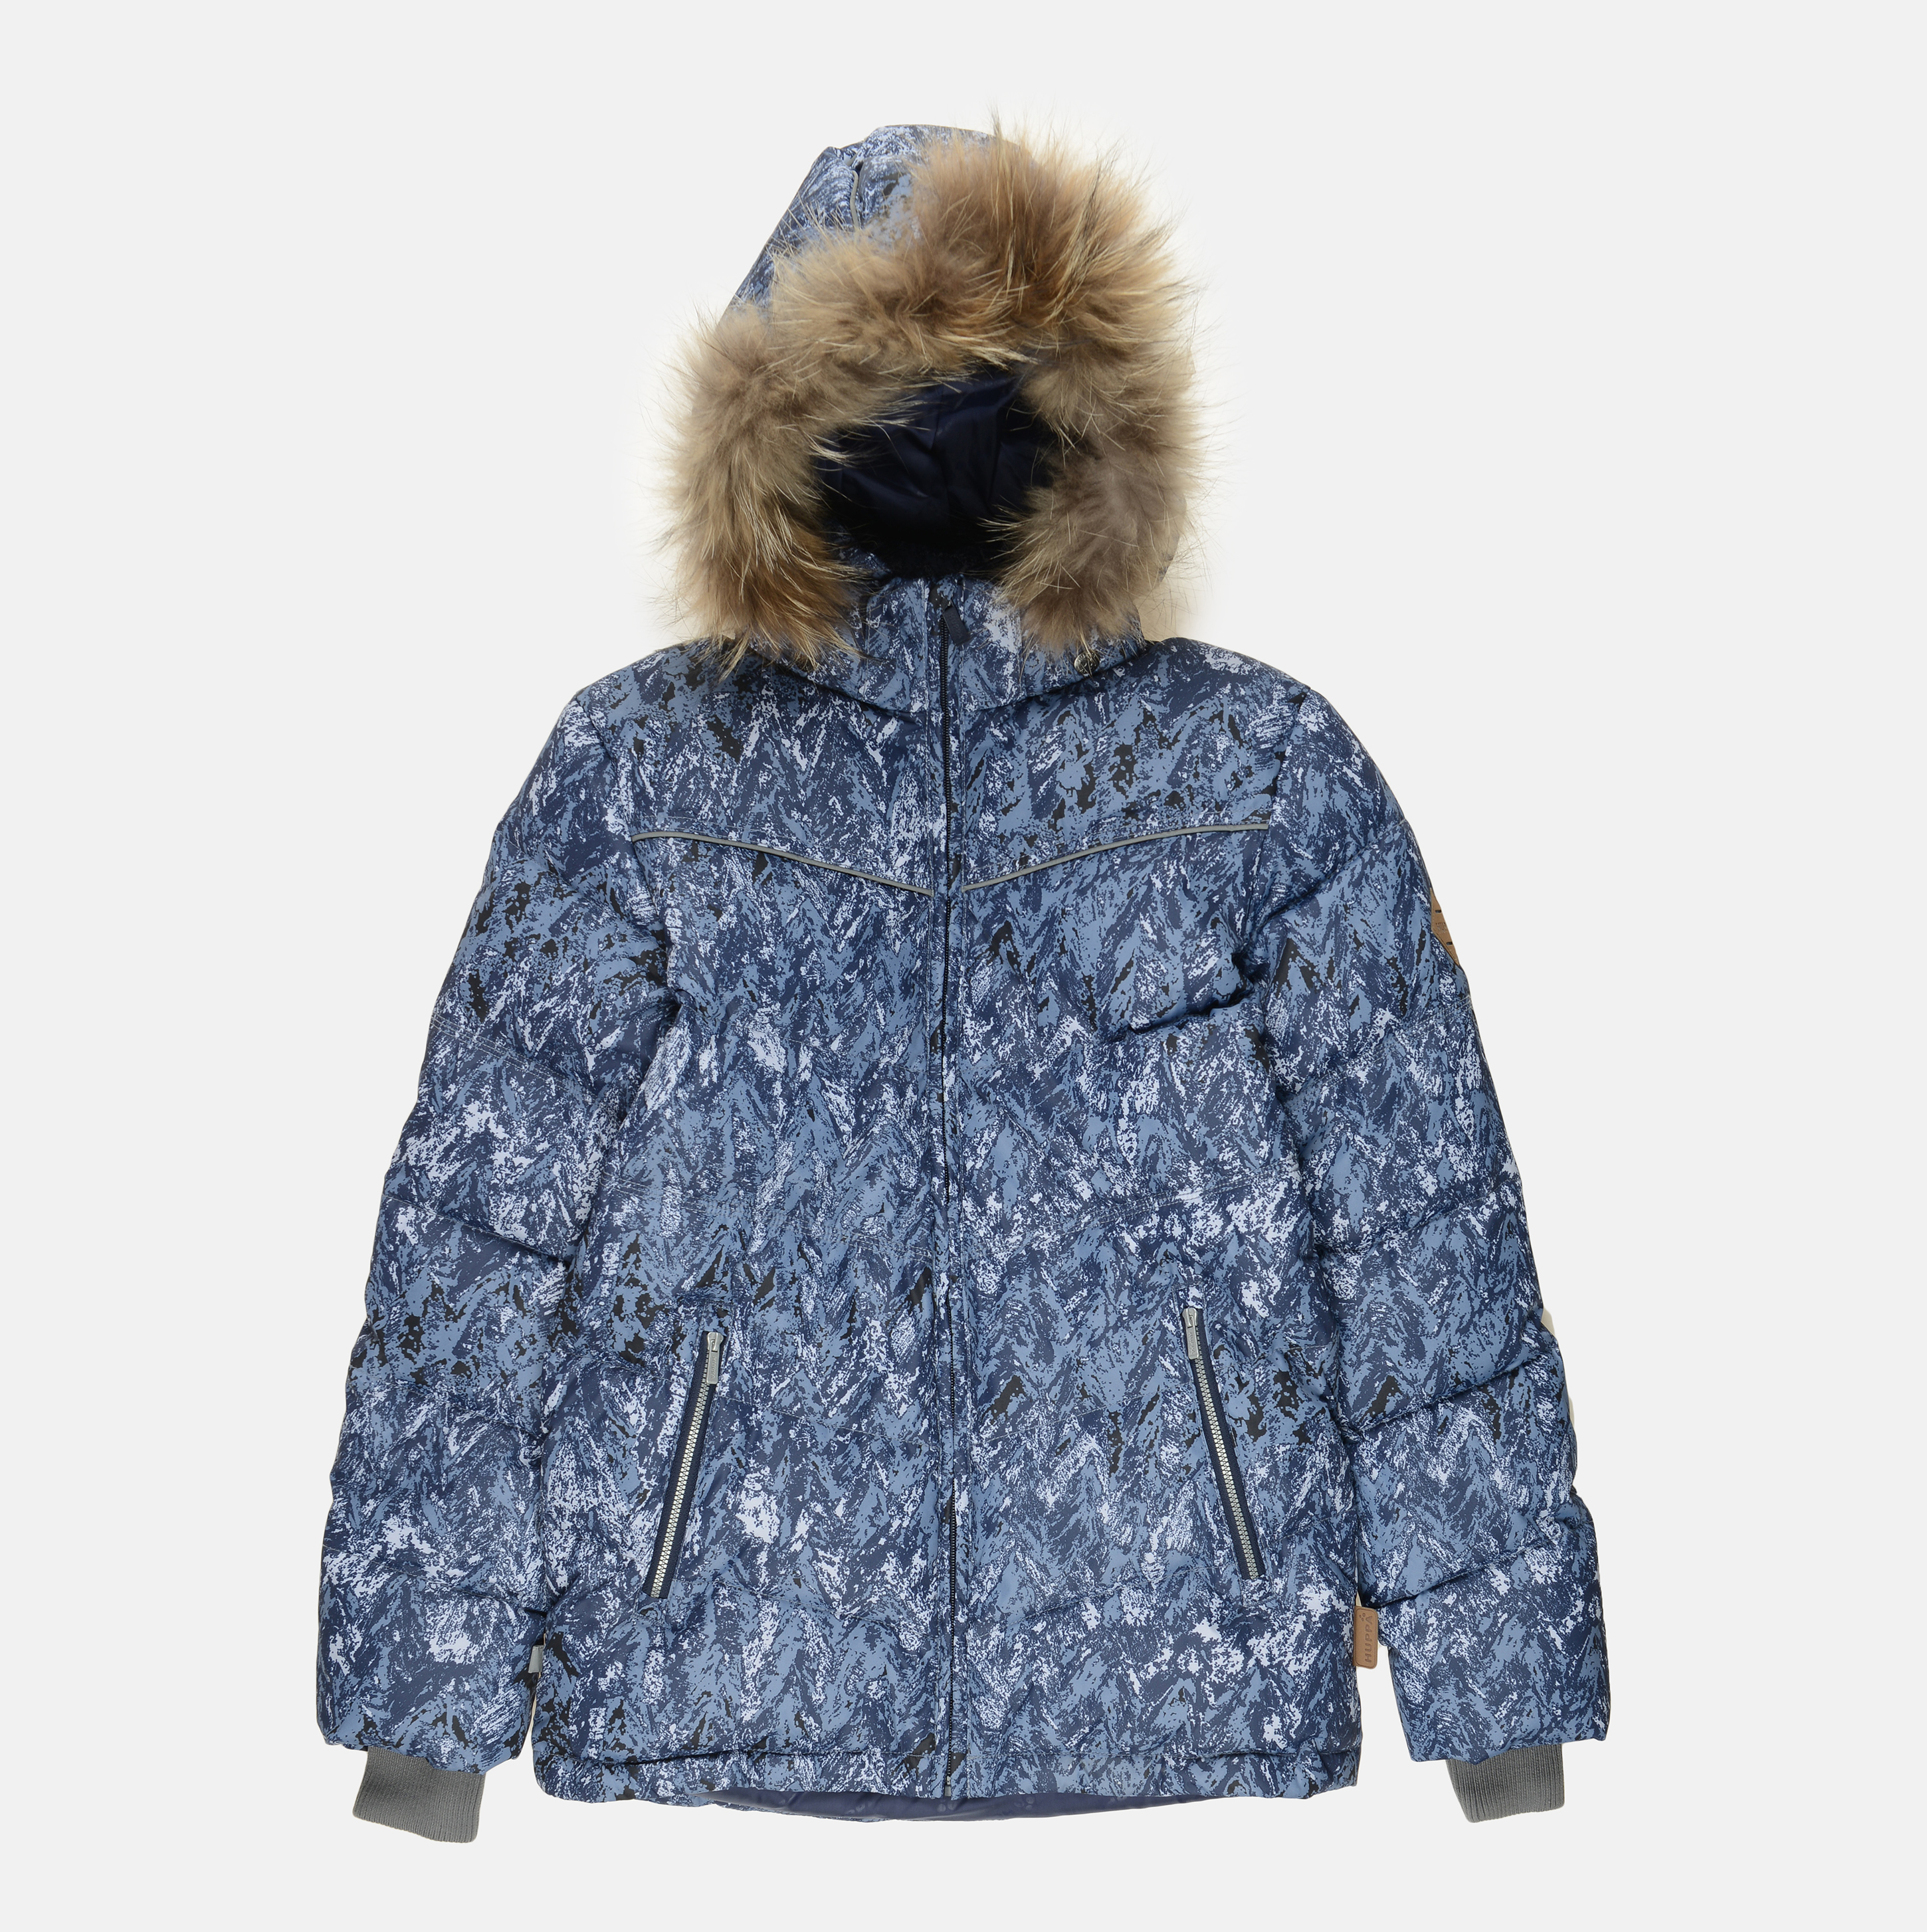 Акция на Підліткова зимова куртка для хлопчика Huppa Moody 1 17470155-73286 140 см от Rozetka